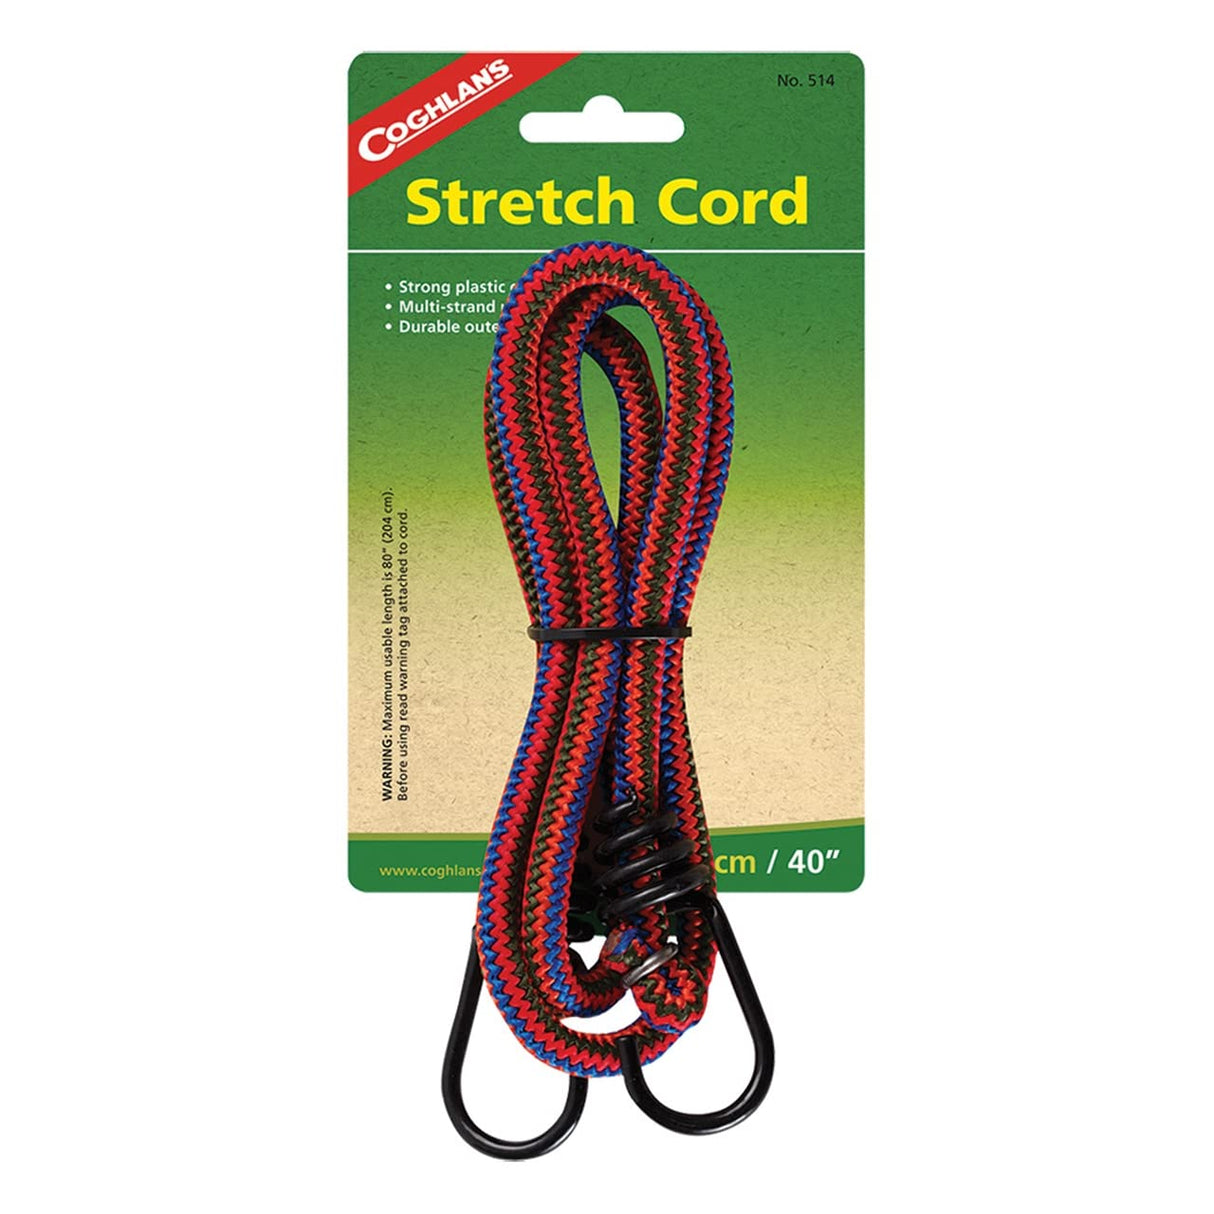 Stretch Cords